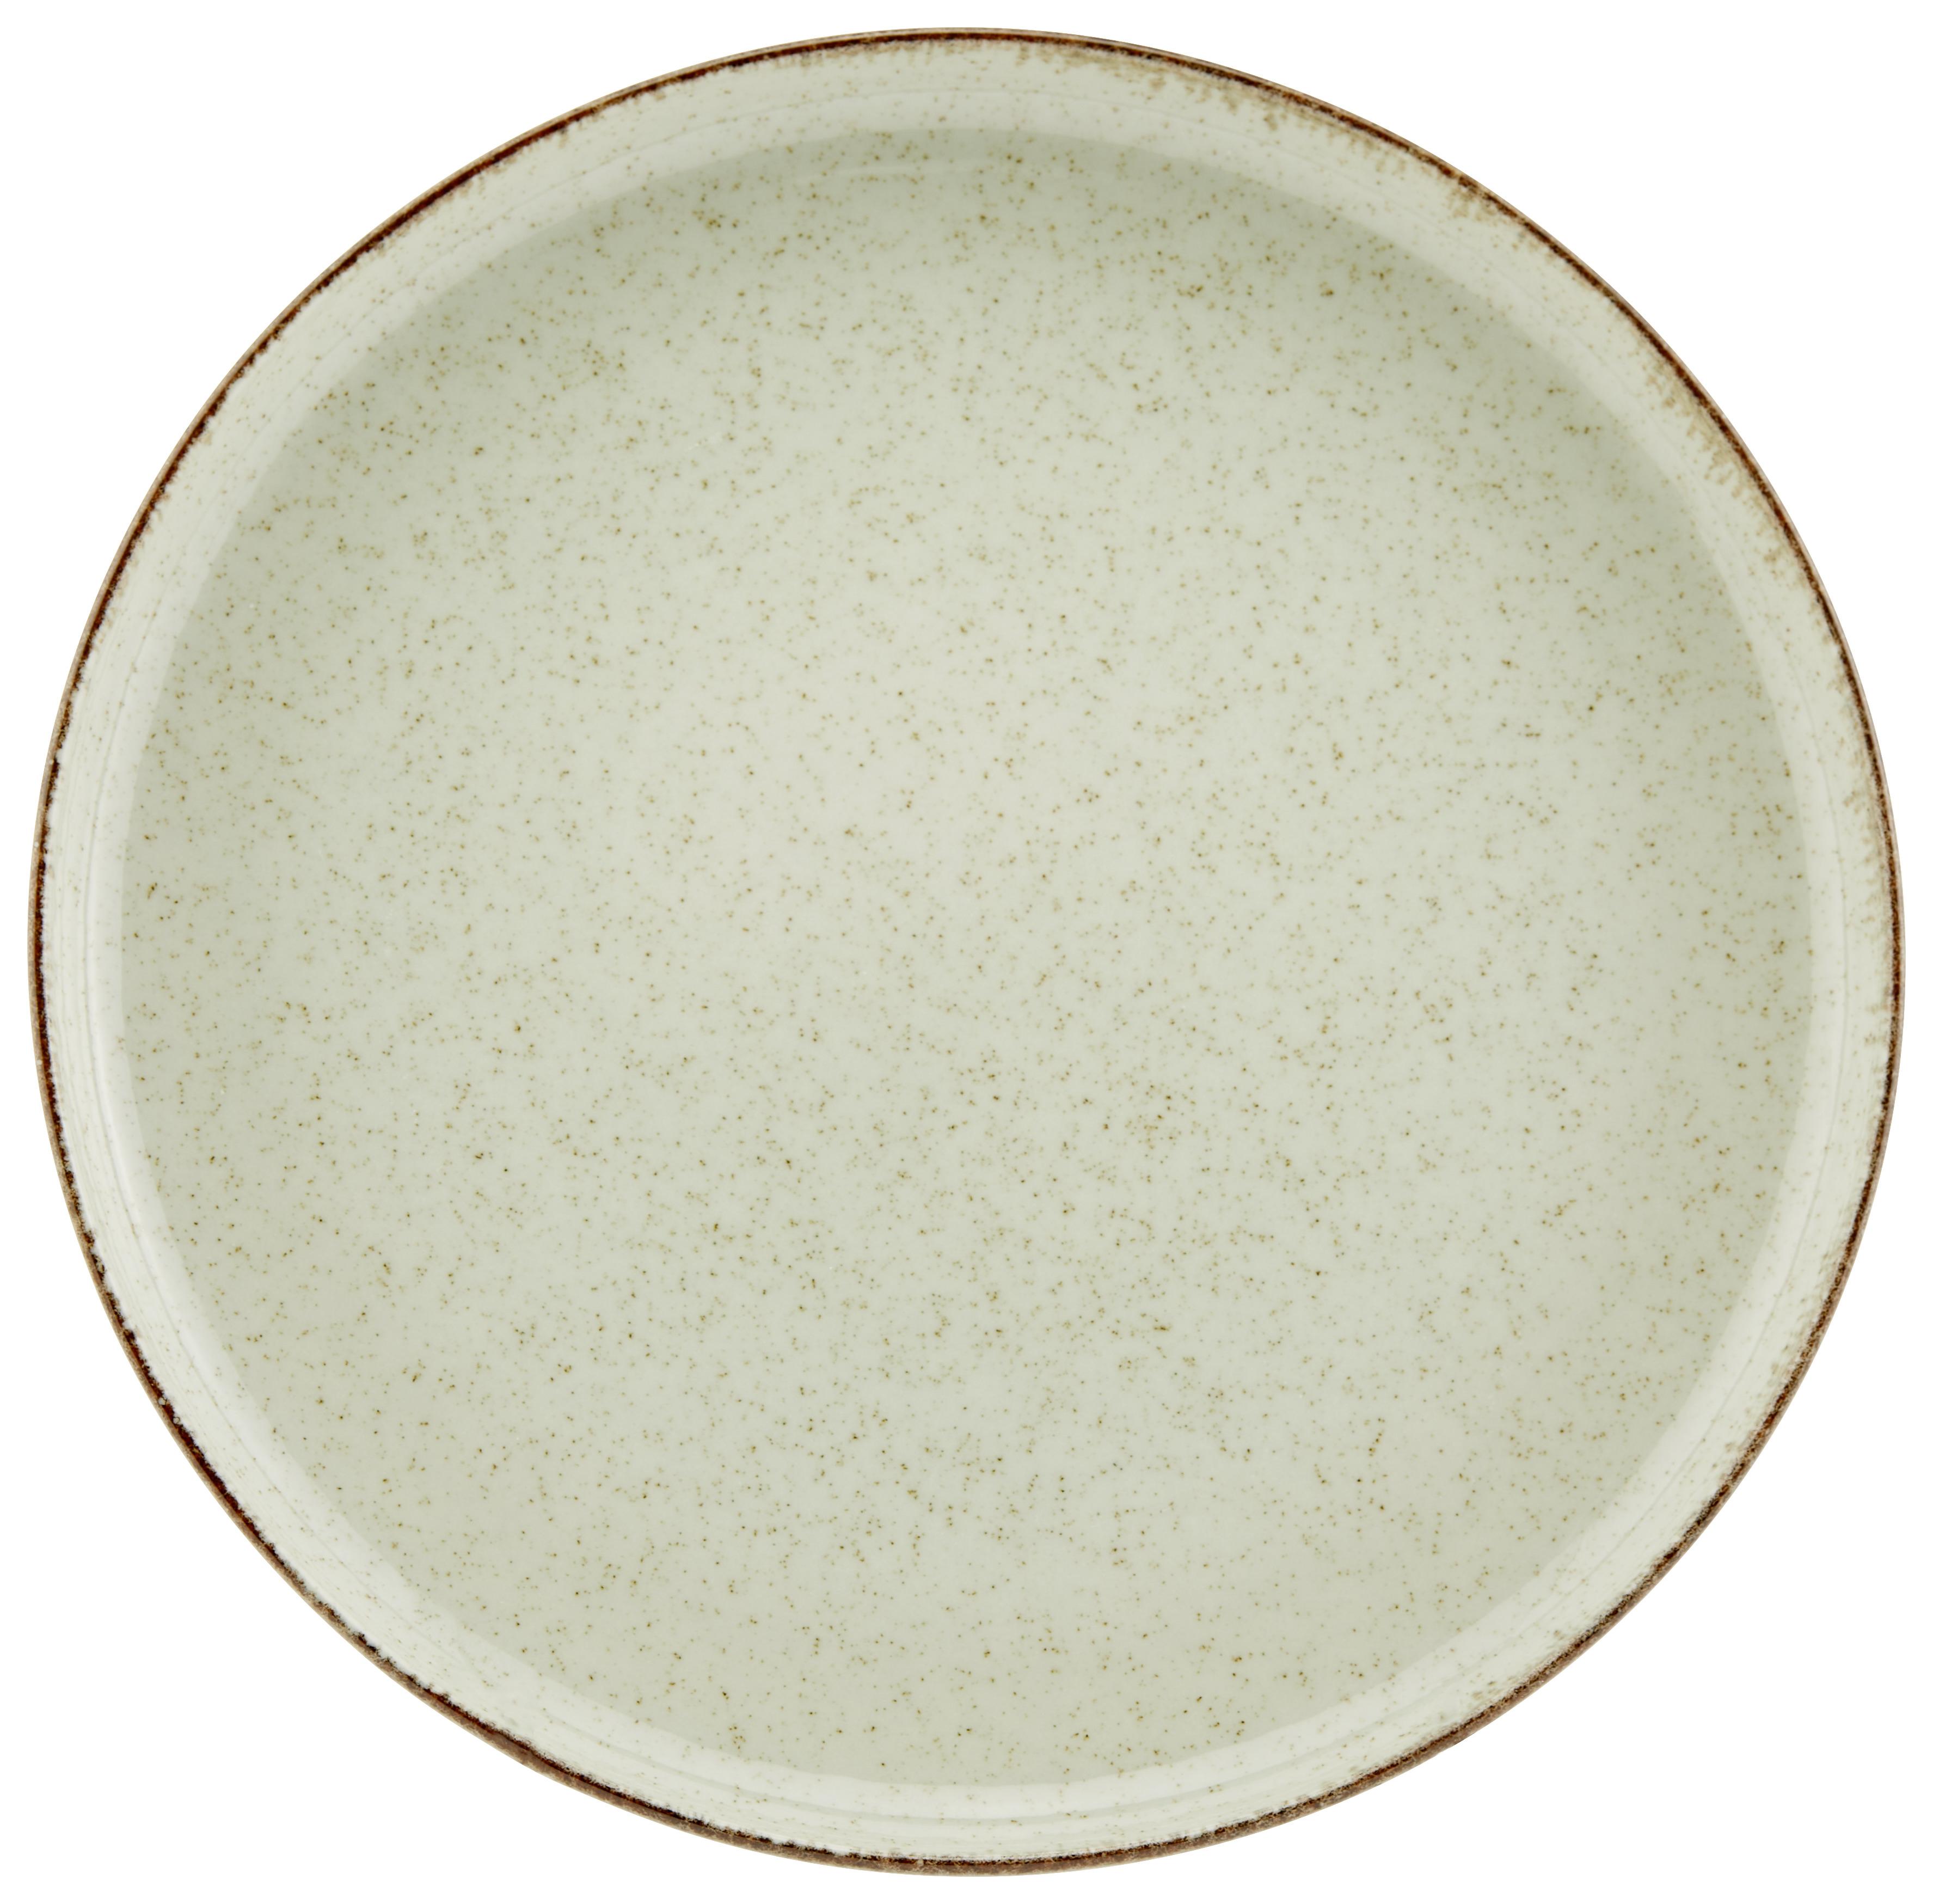 Dessertteller Porzellan Grün Sonora ca. 19 cm - Grün, MODERN, Keramik (19cm) - James Wood